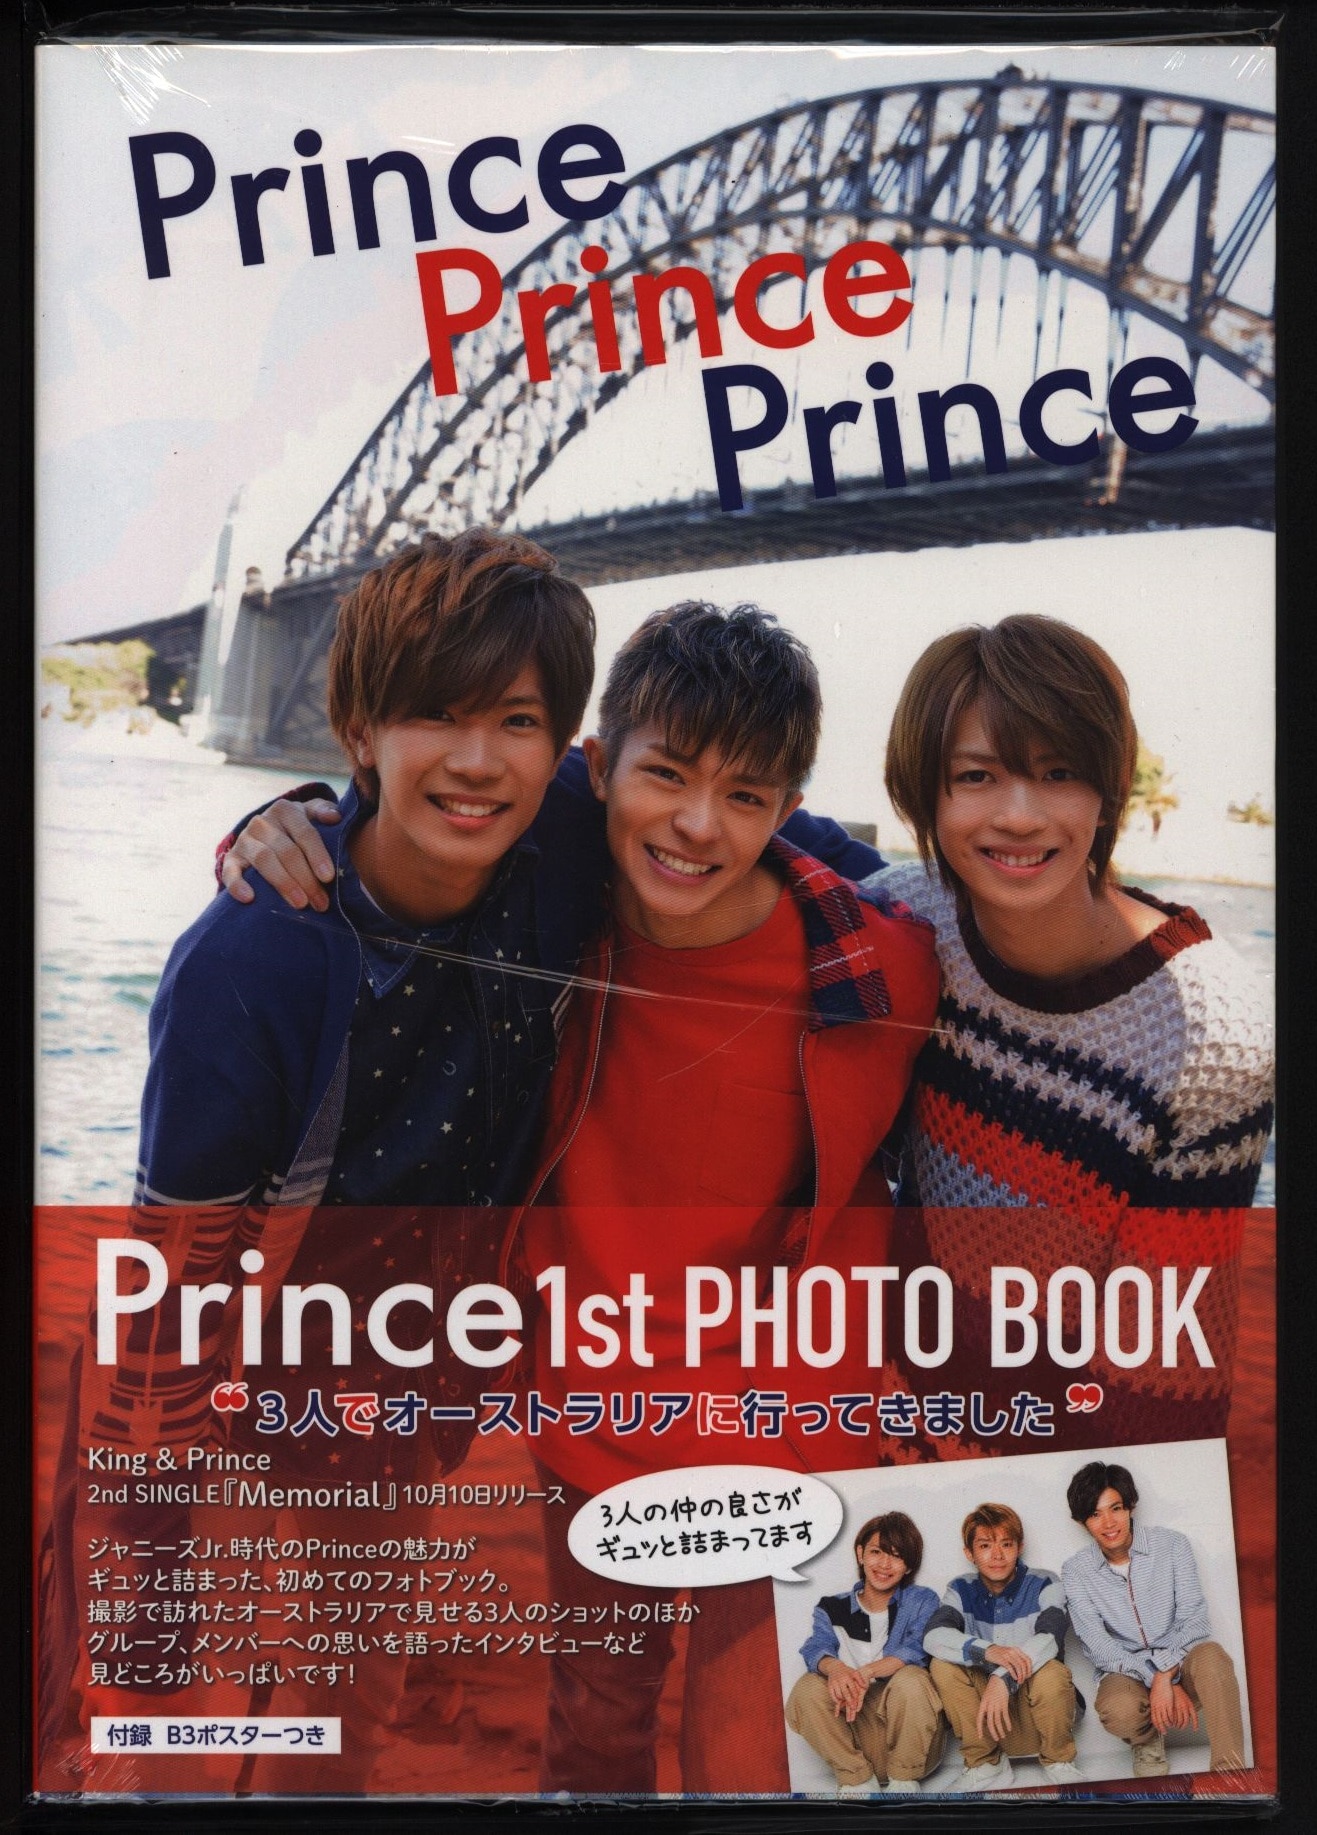 Prince 1stPHOTOBOOK Prince Prince Prince